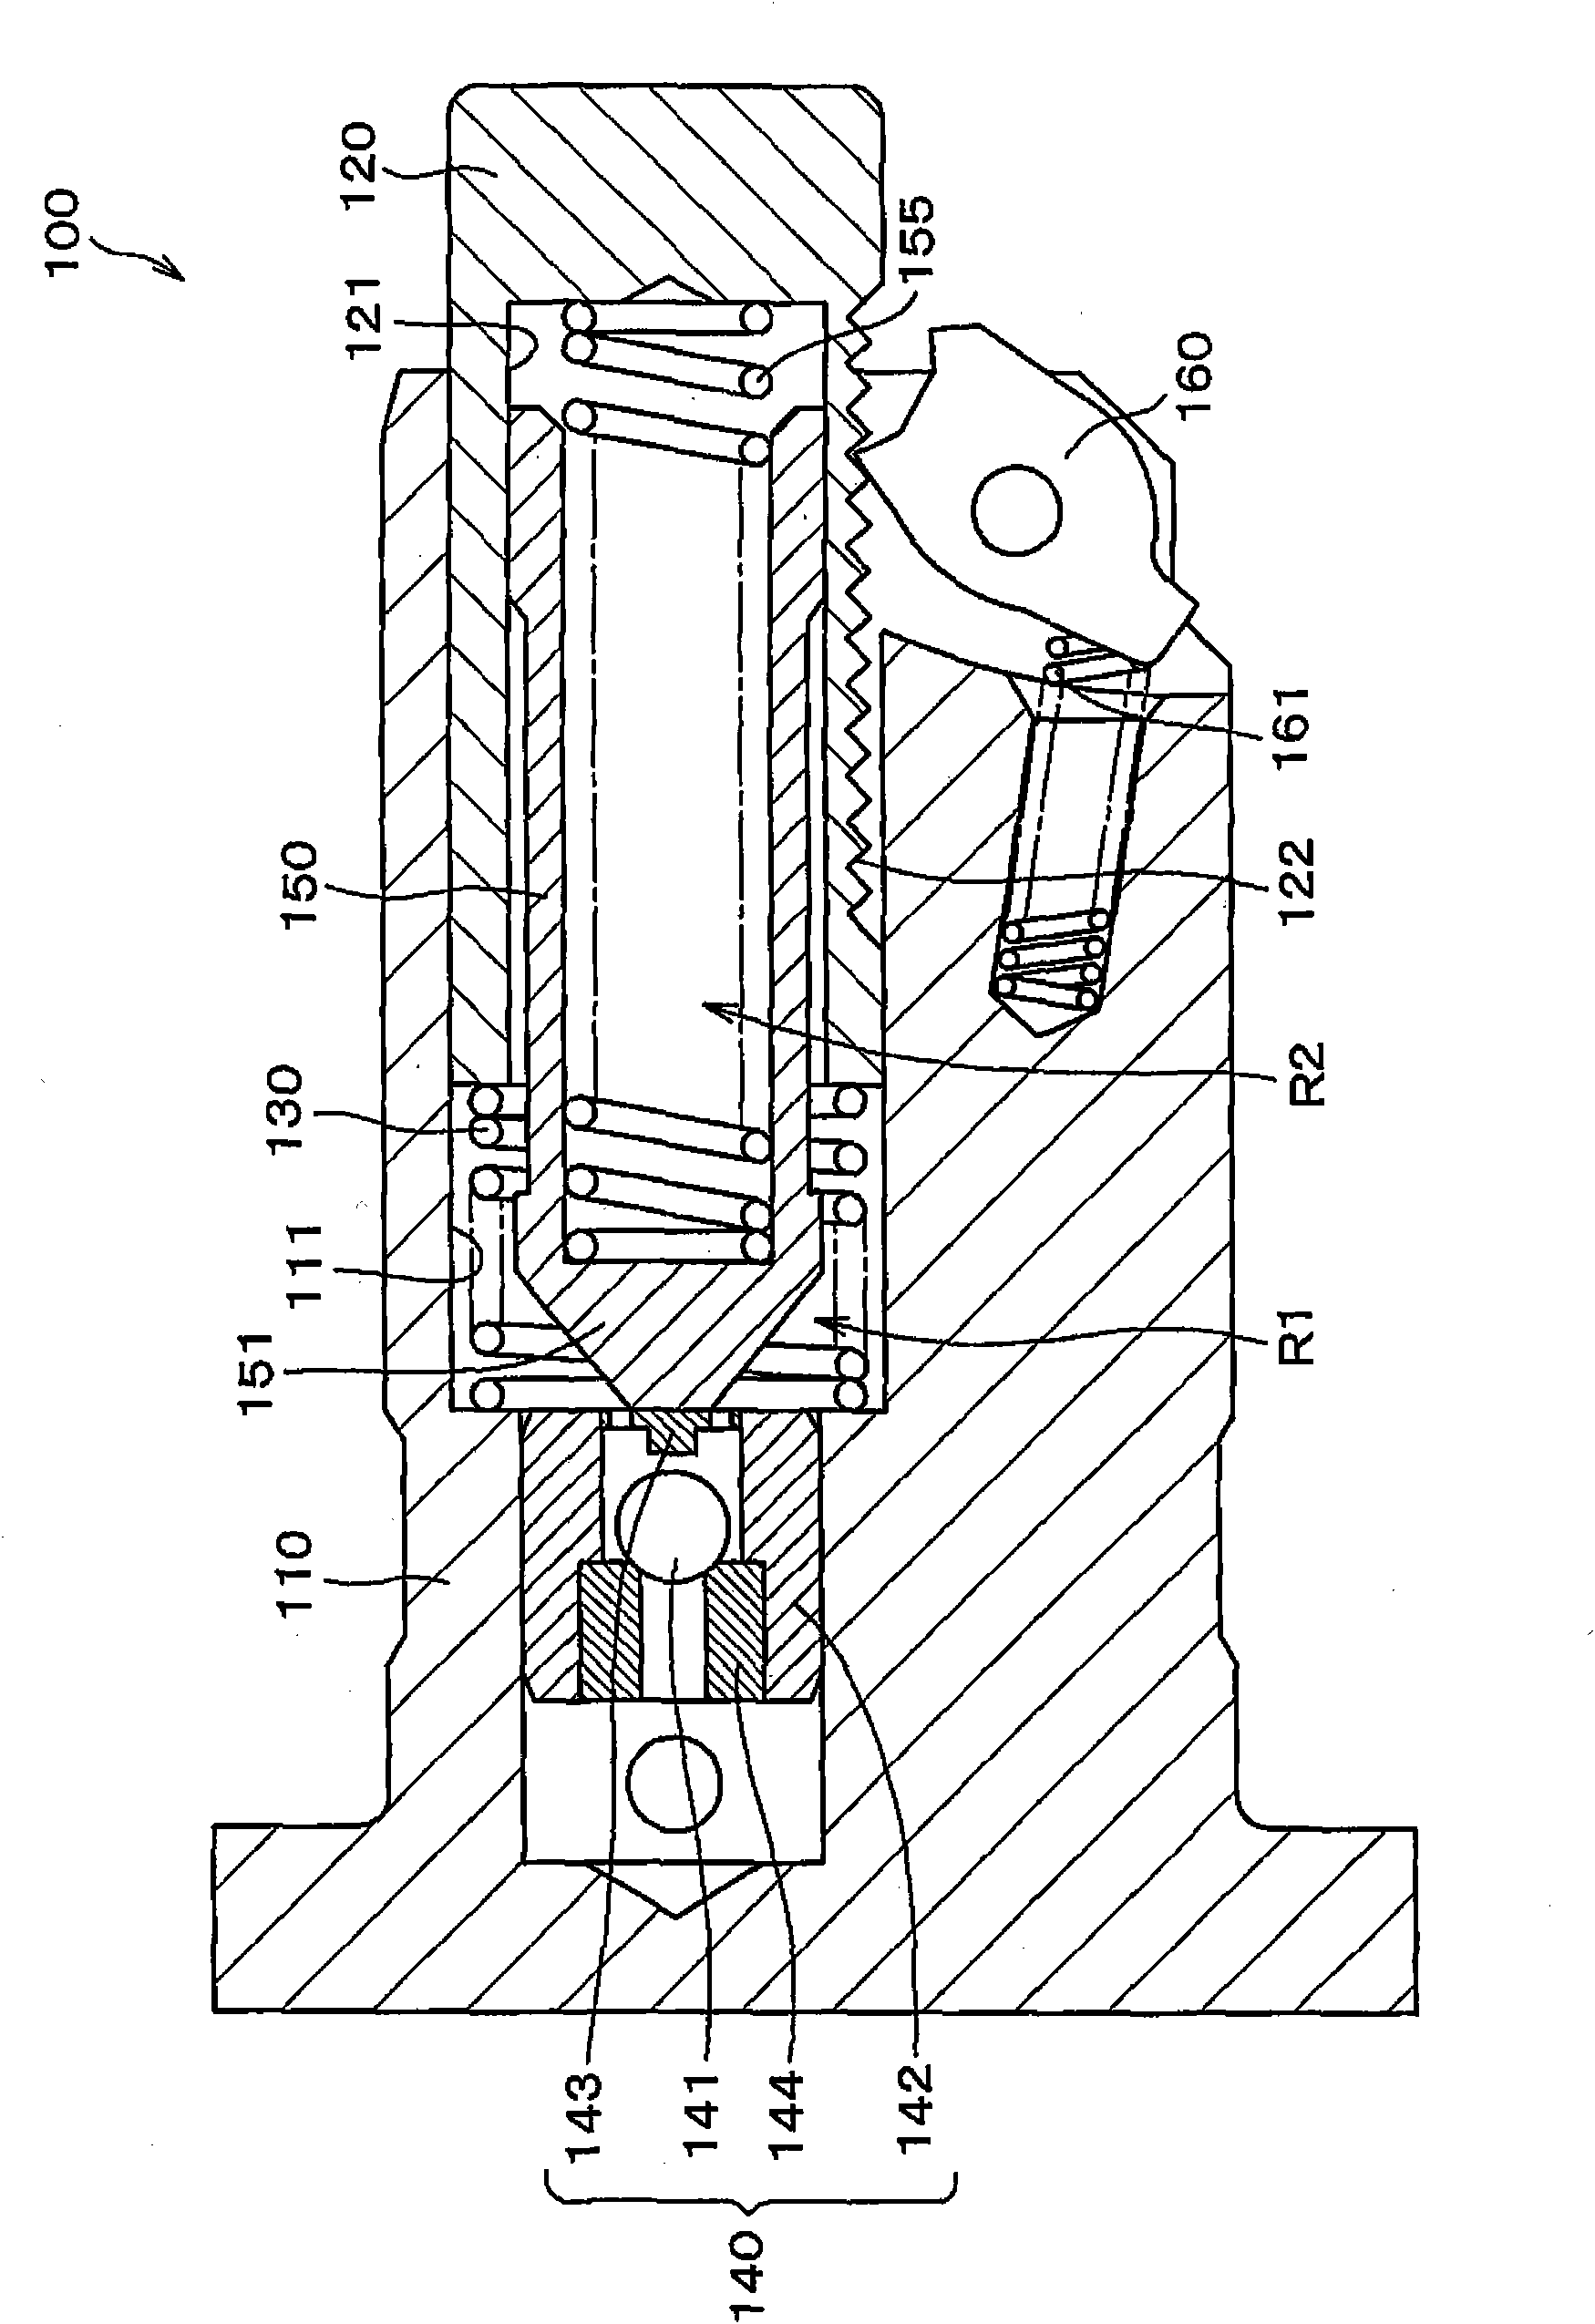 Hydraulic tension device